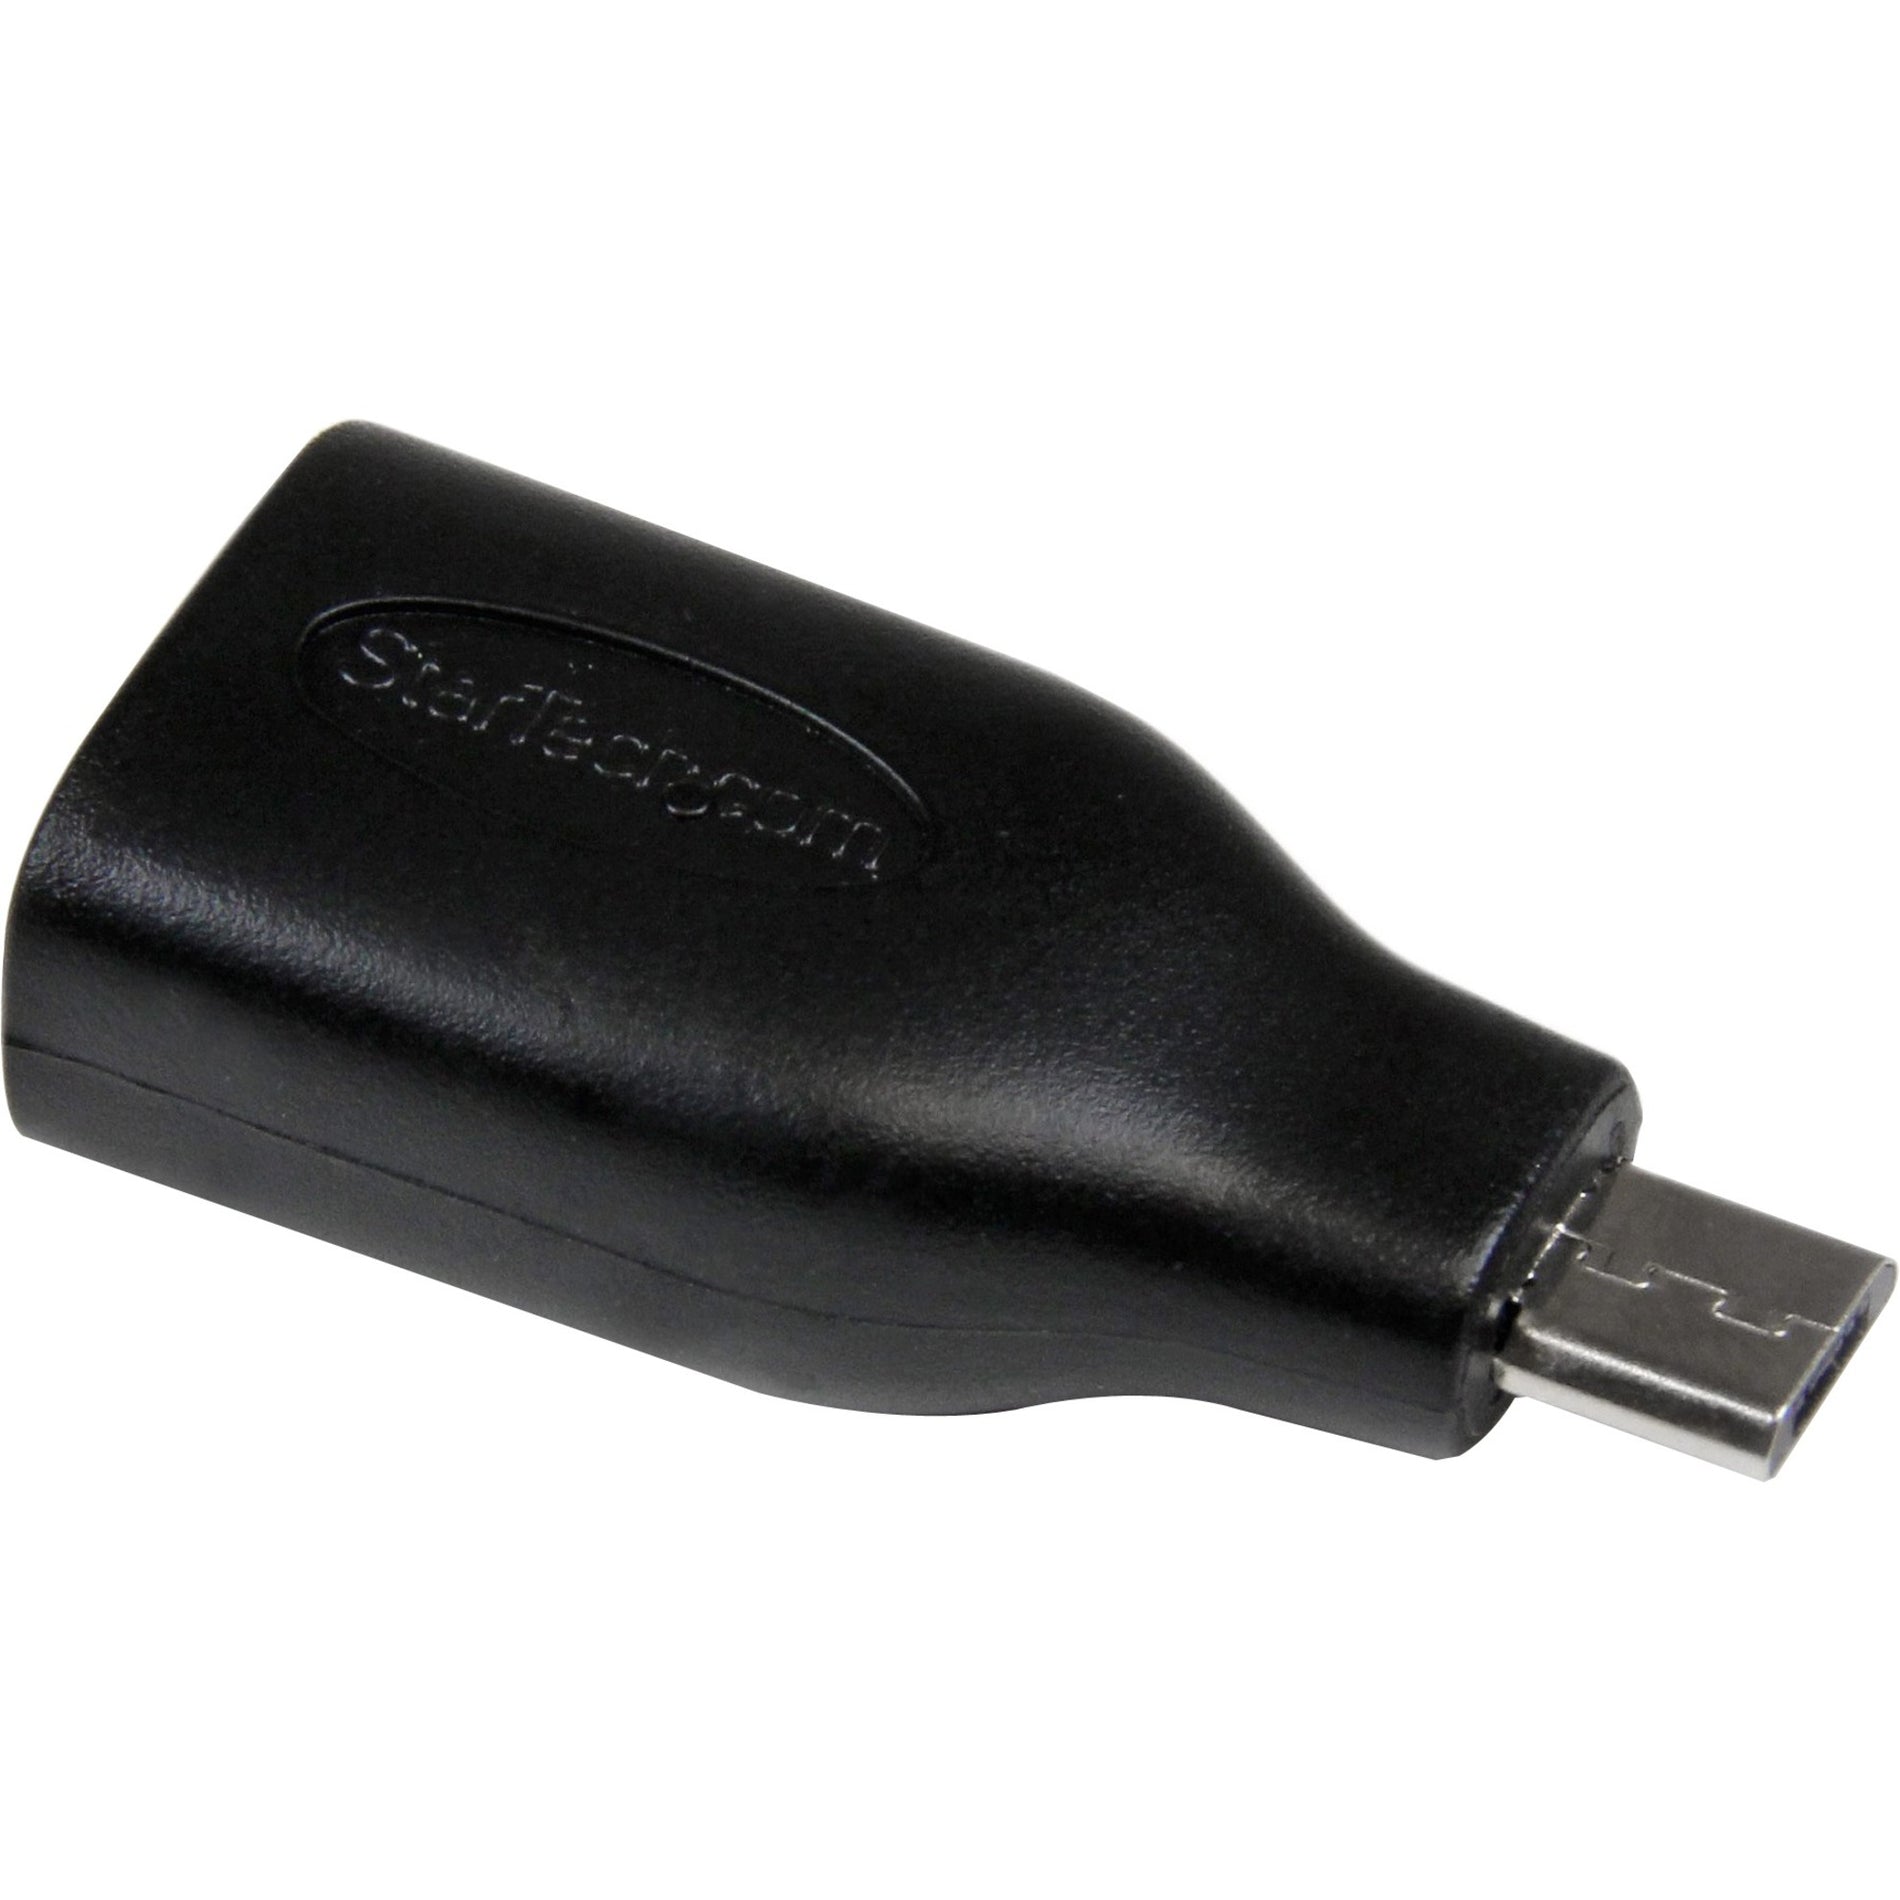 StarTech.com UUSBOTGADAP Micro USB OTG (On The Go) to USB Adapter - M/F, Data Transfer Adapter